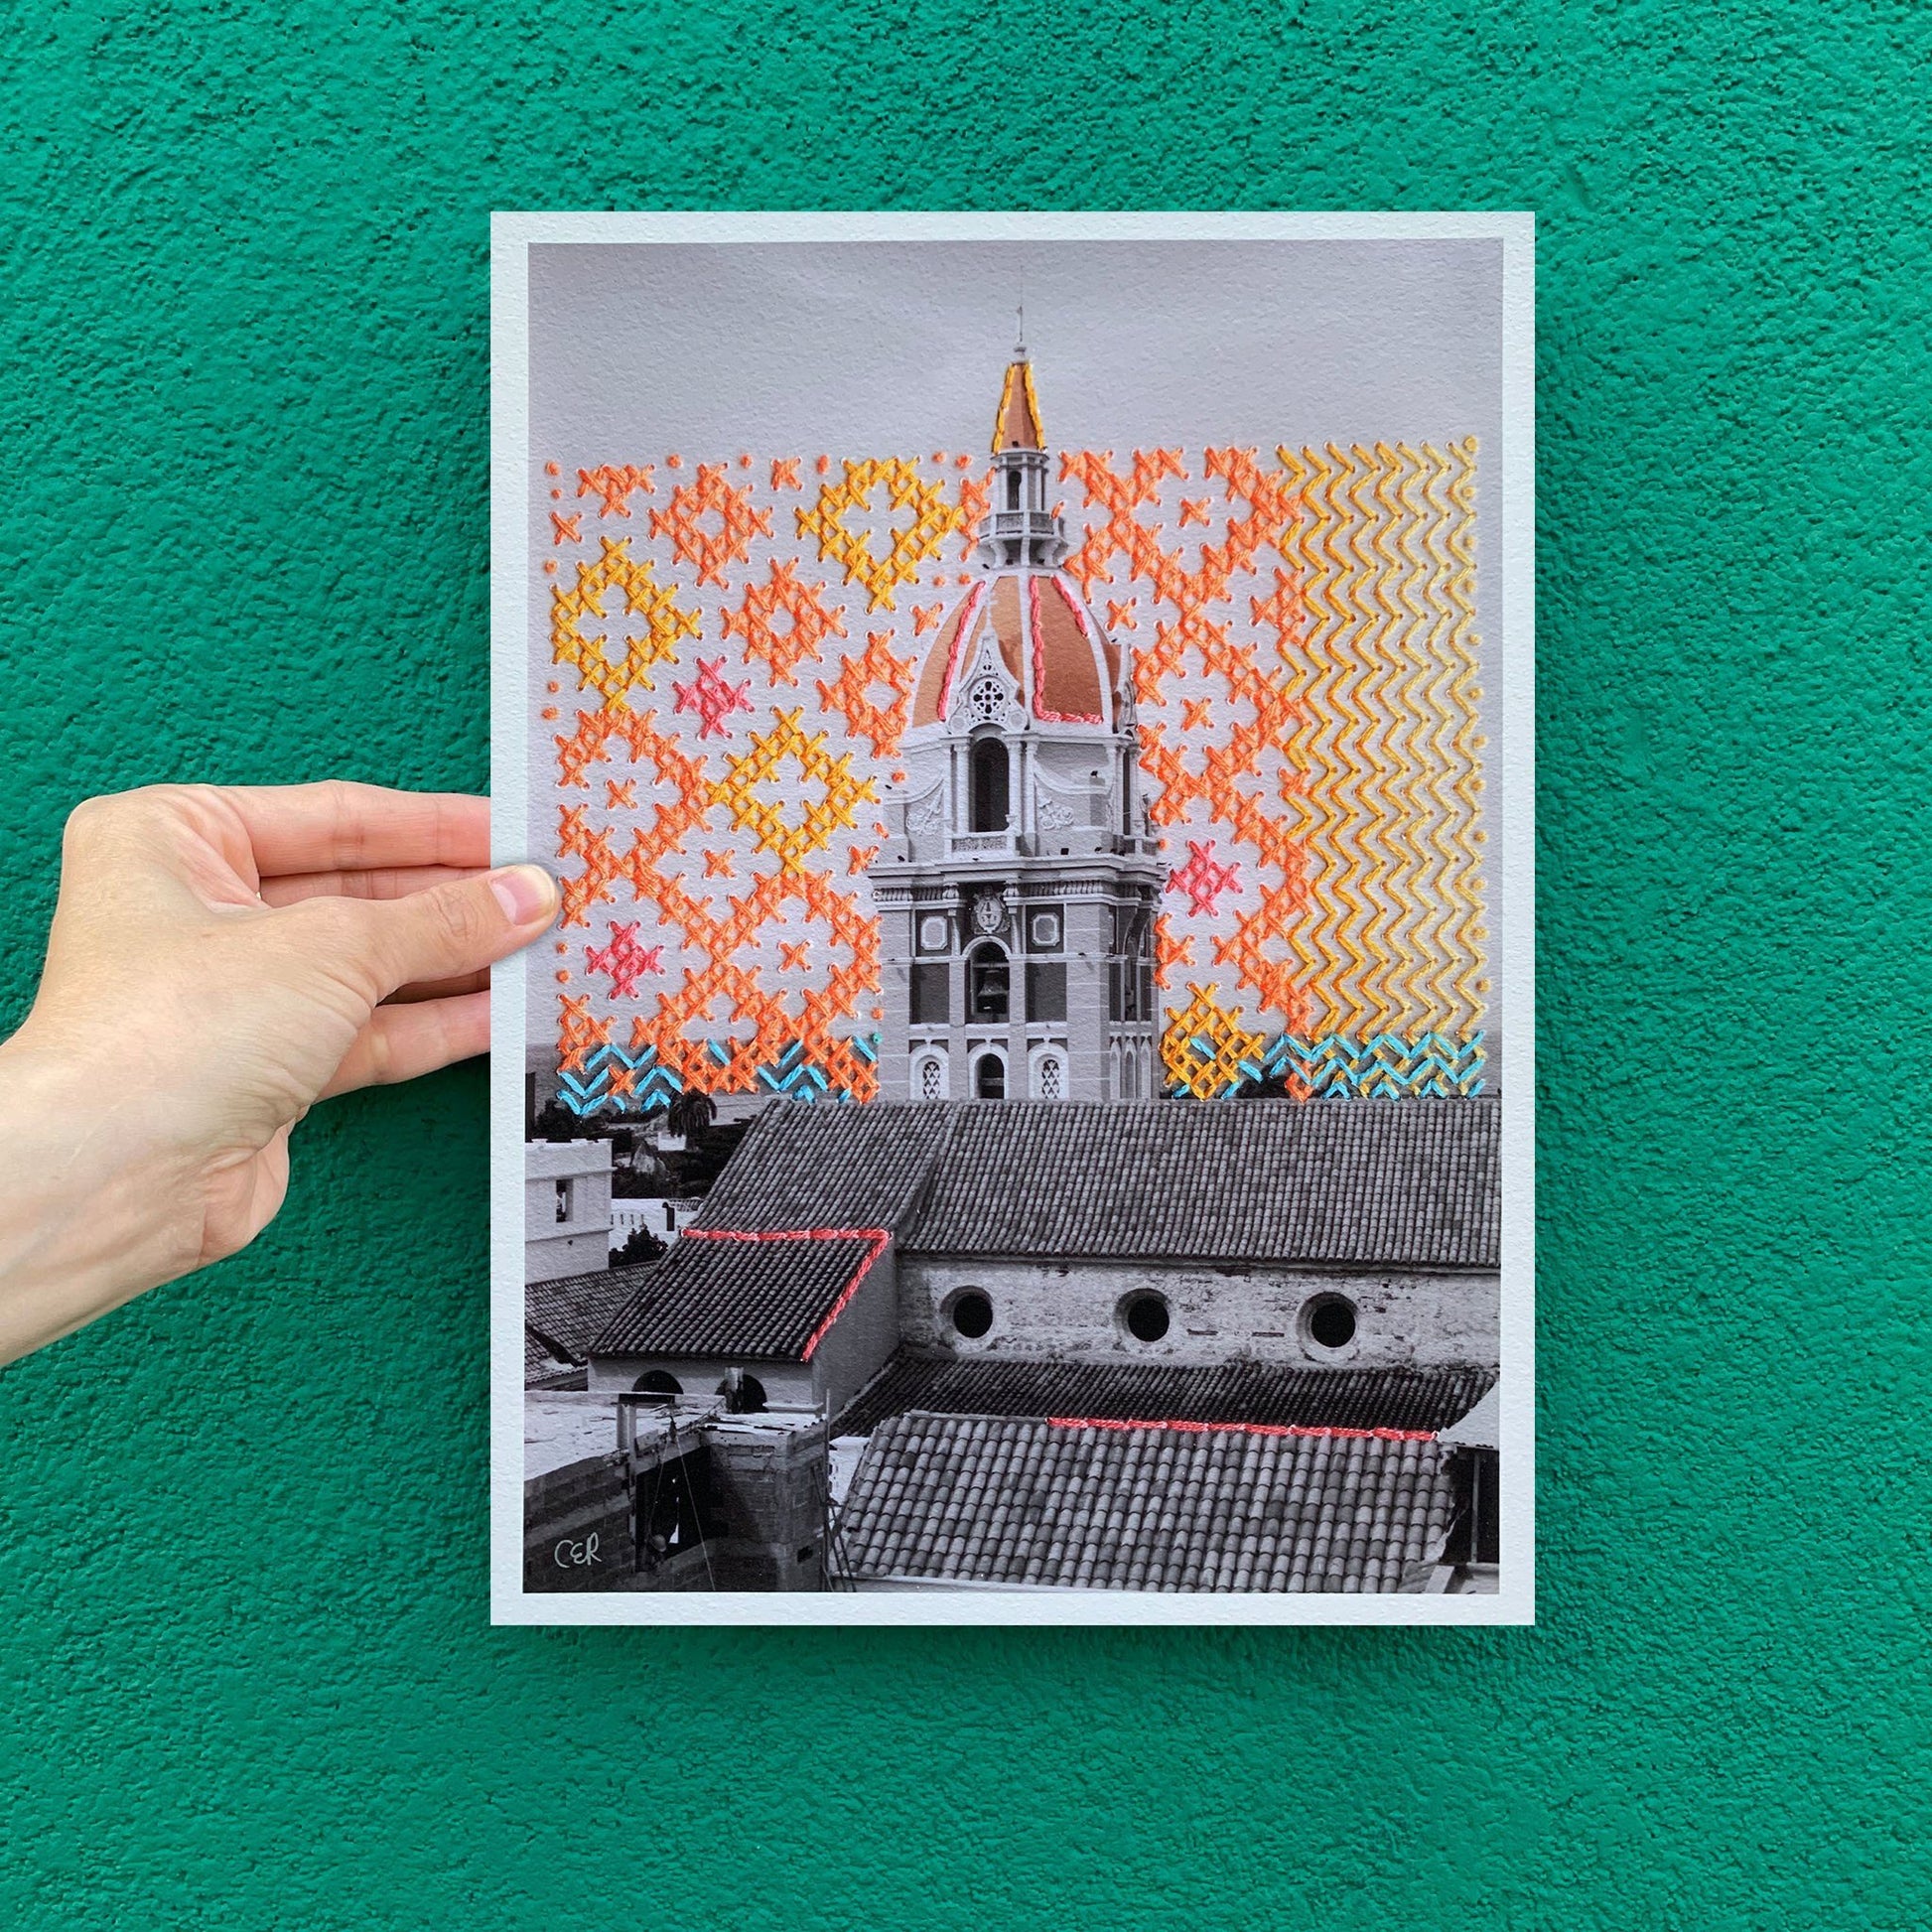 Tejiendo La Heroica: Hand embroidery art print - Catalina Escallon